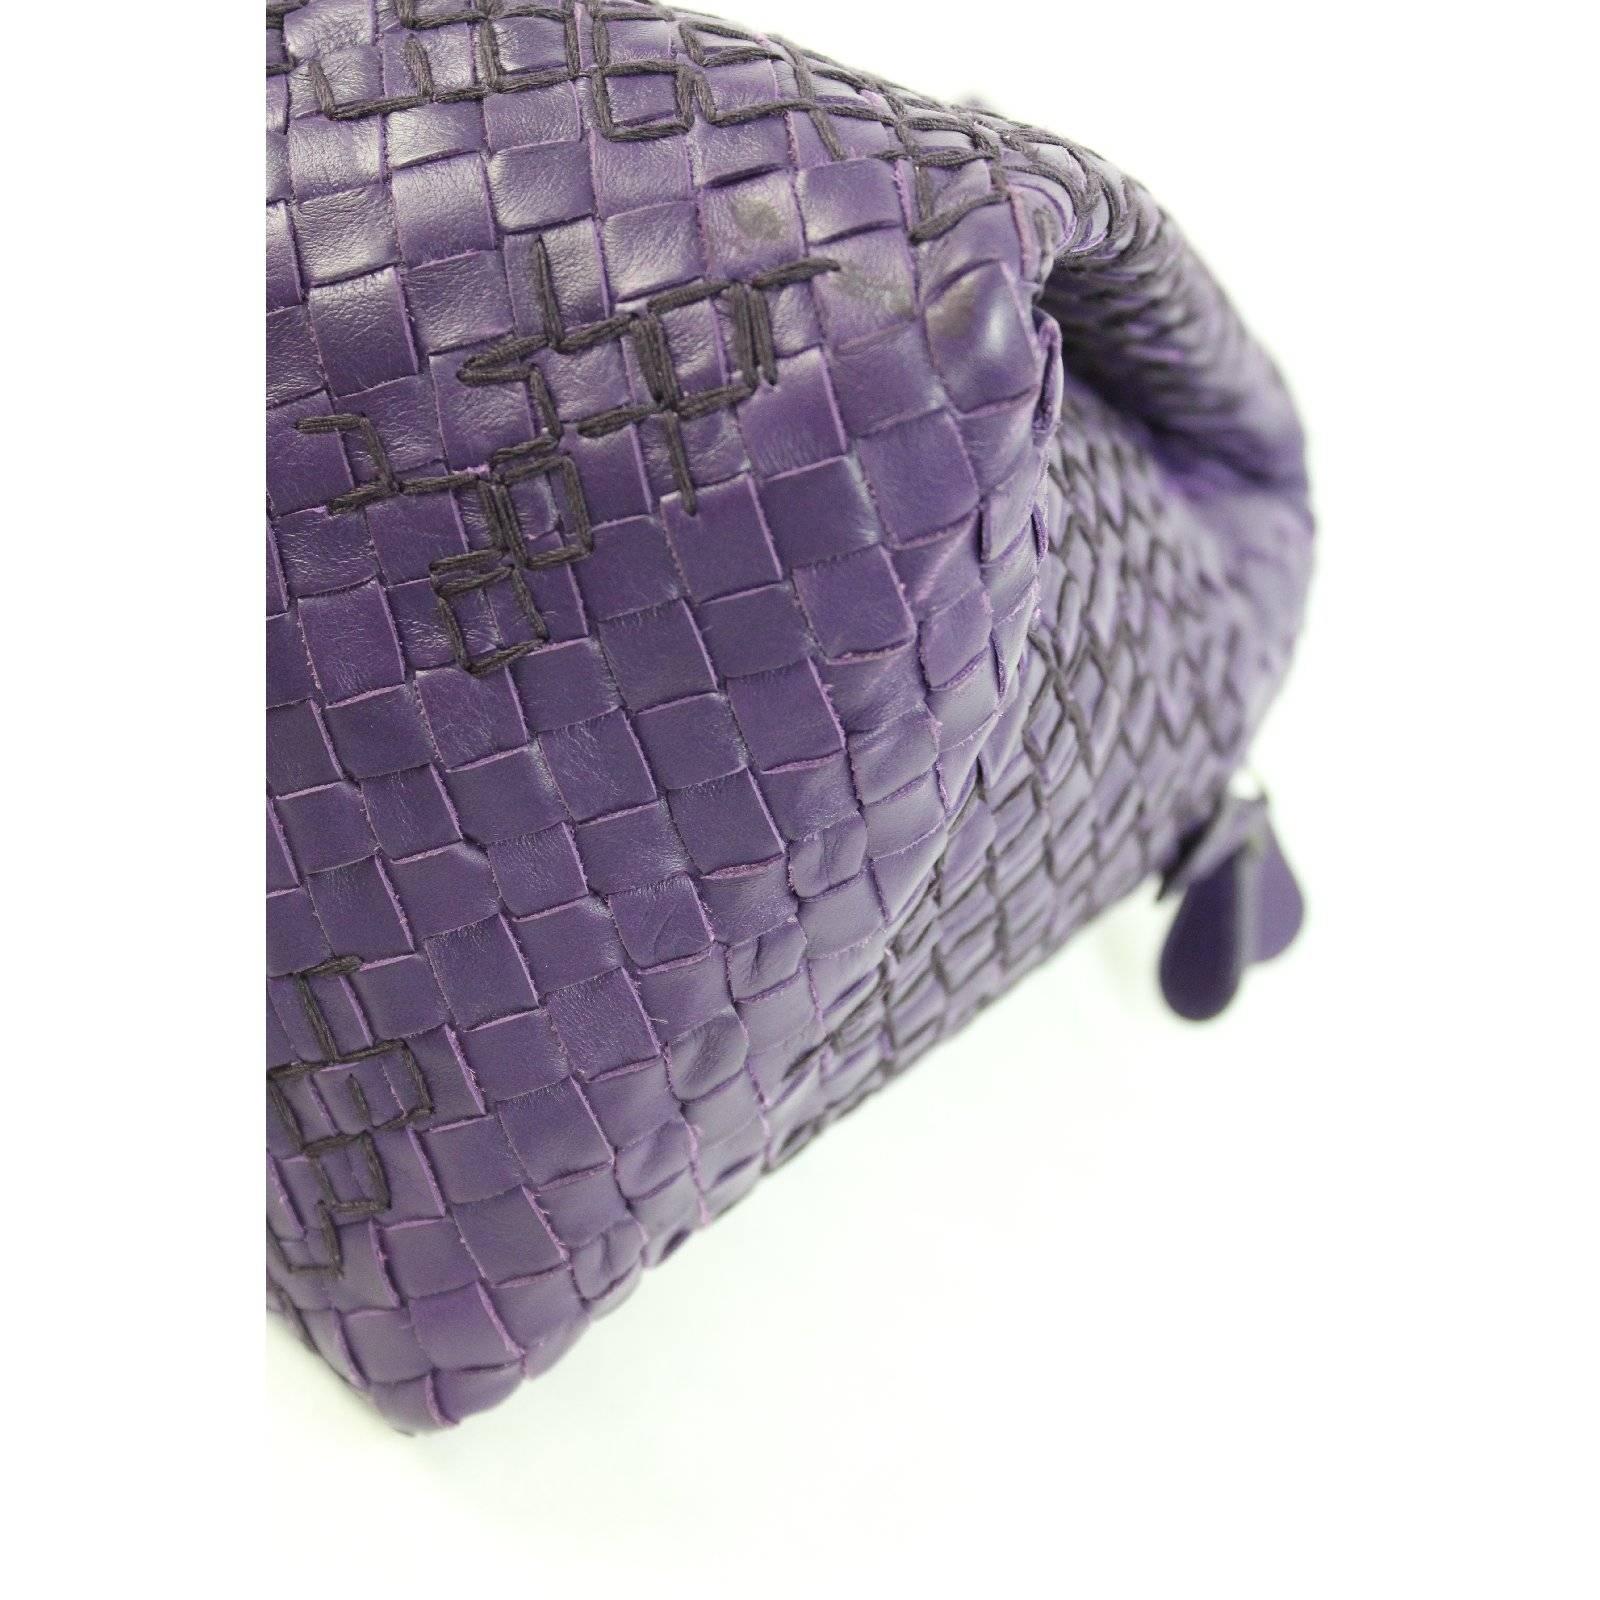 Gray Bottega Veneta Boston leather purple handbag bag 2003s like new made in italy